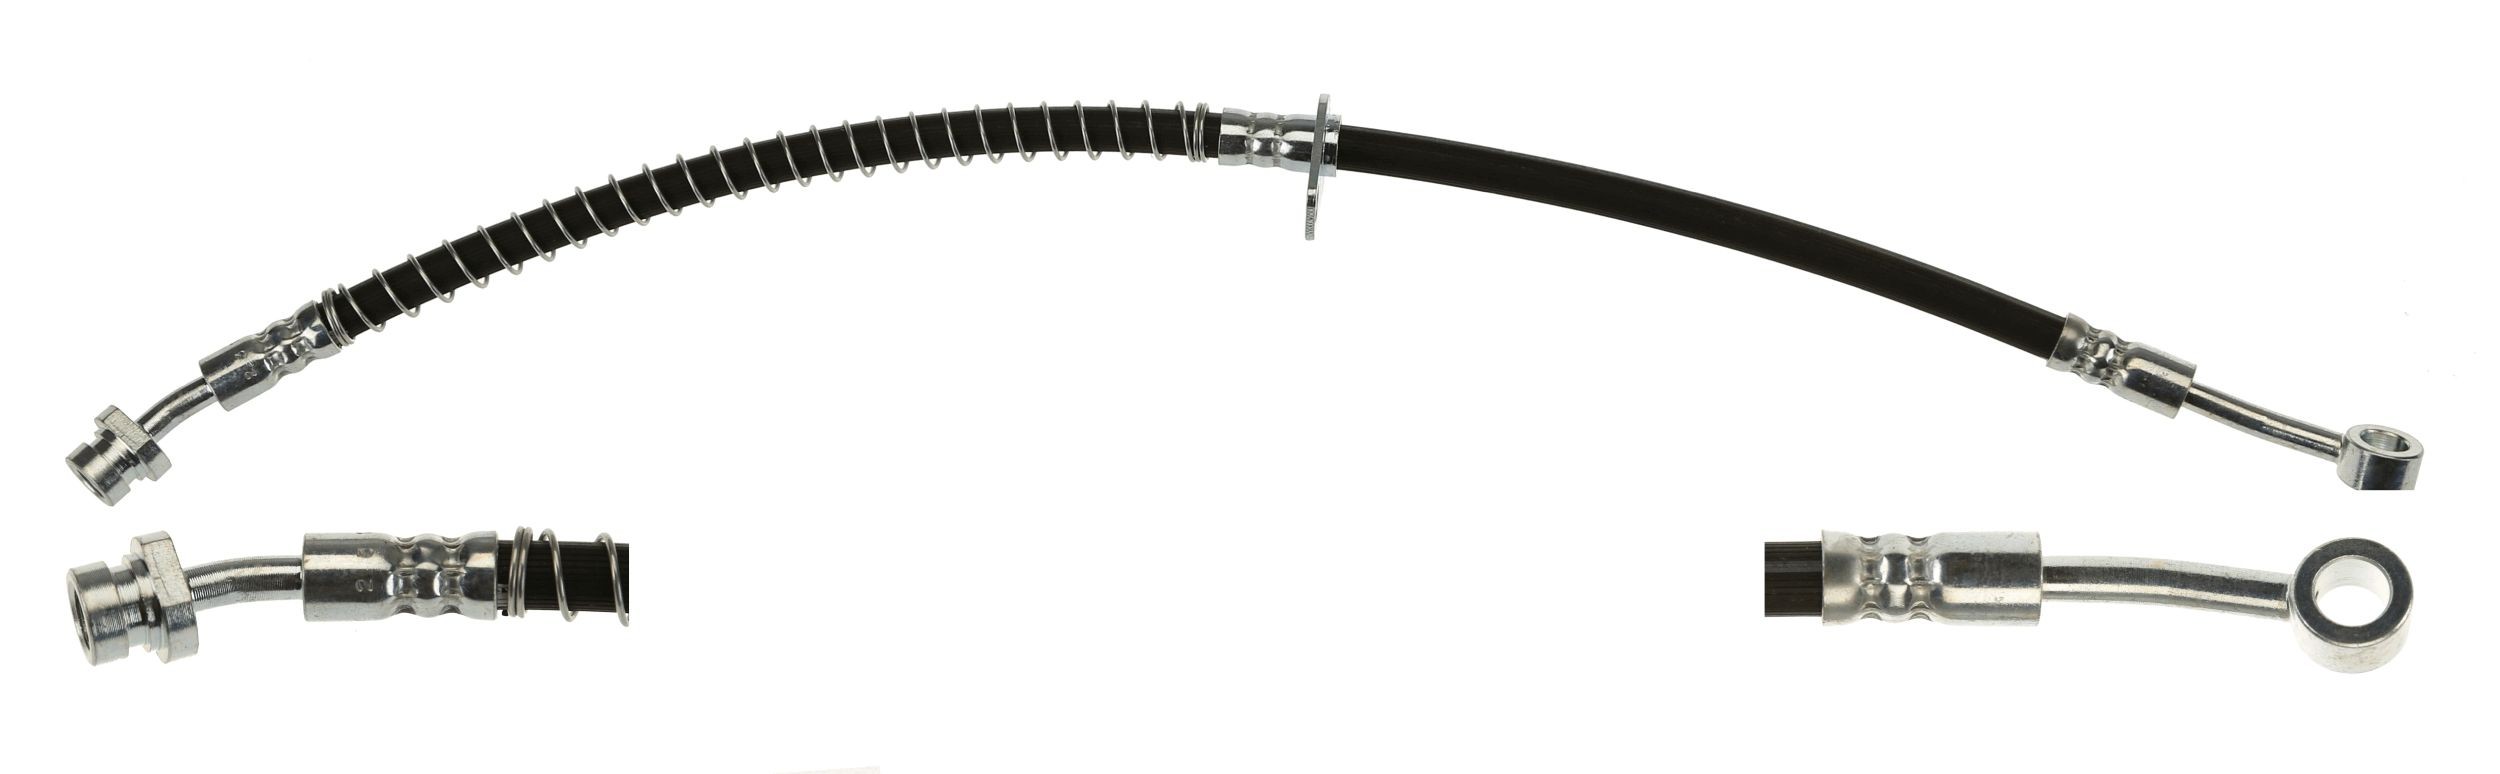 TRW 469 mm, M10x1, Internal Thread Length: 469mm, Thread Size 1: M10x1, Thread Size 2: Banjo Brake line PHD1194 buy